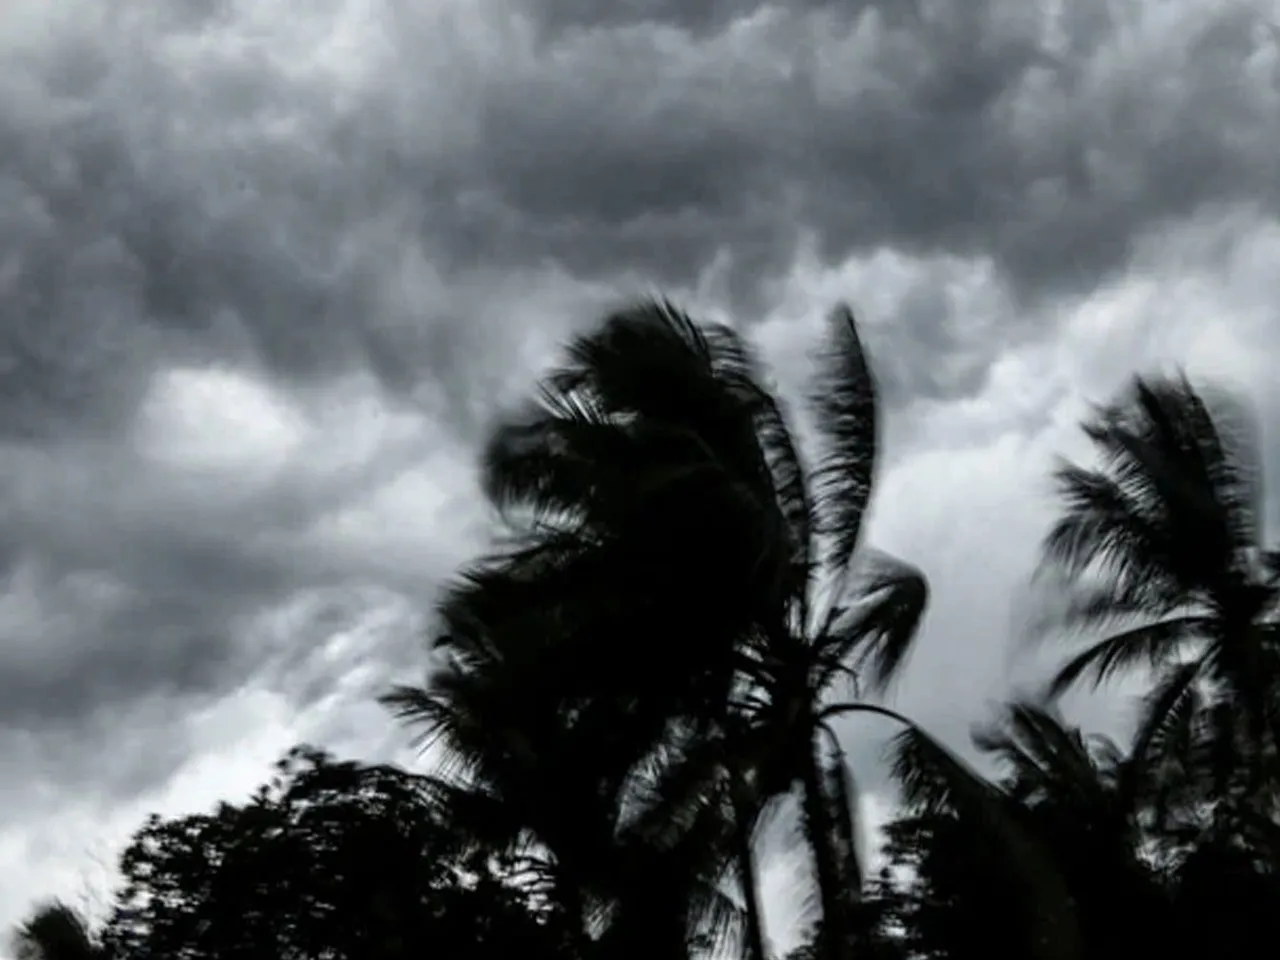 Cyclone: উত্তাল হবে সমুদ্র, ১১, ১২ তারিখ সাবধানে থাকুন